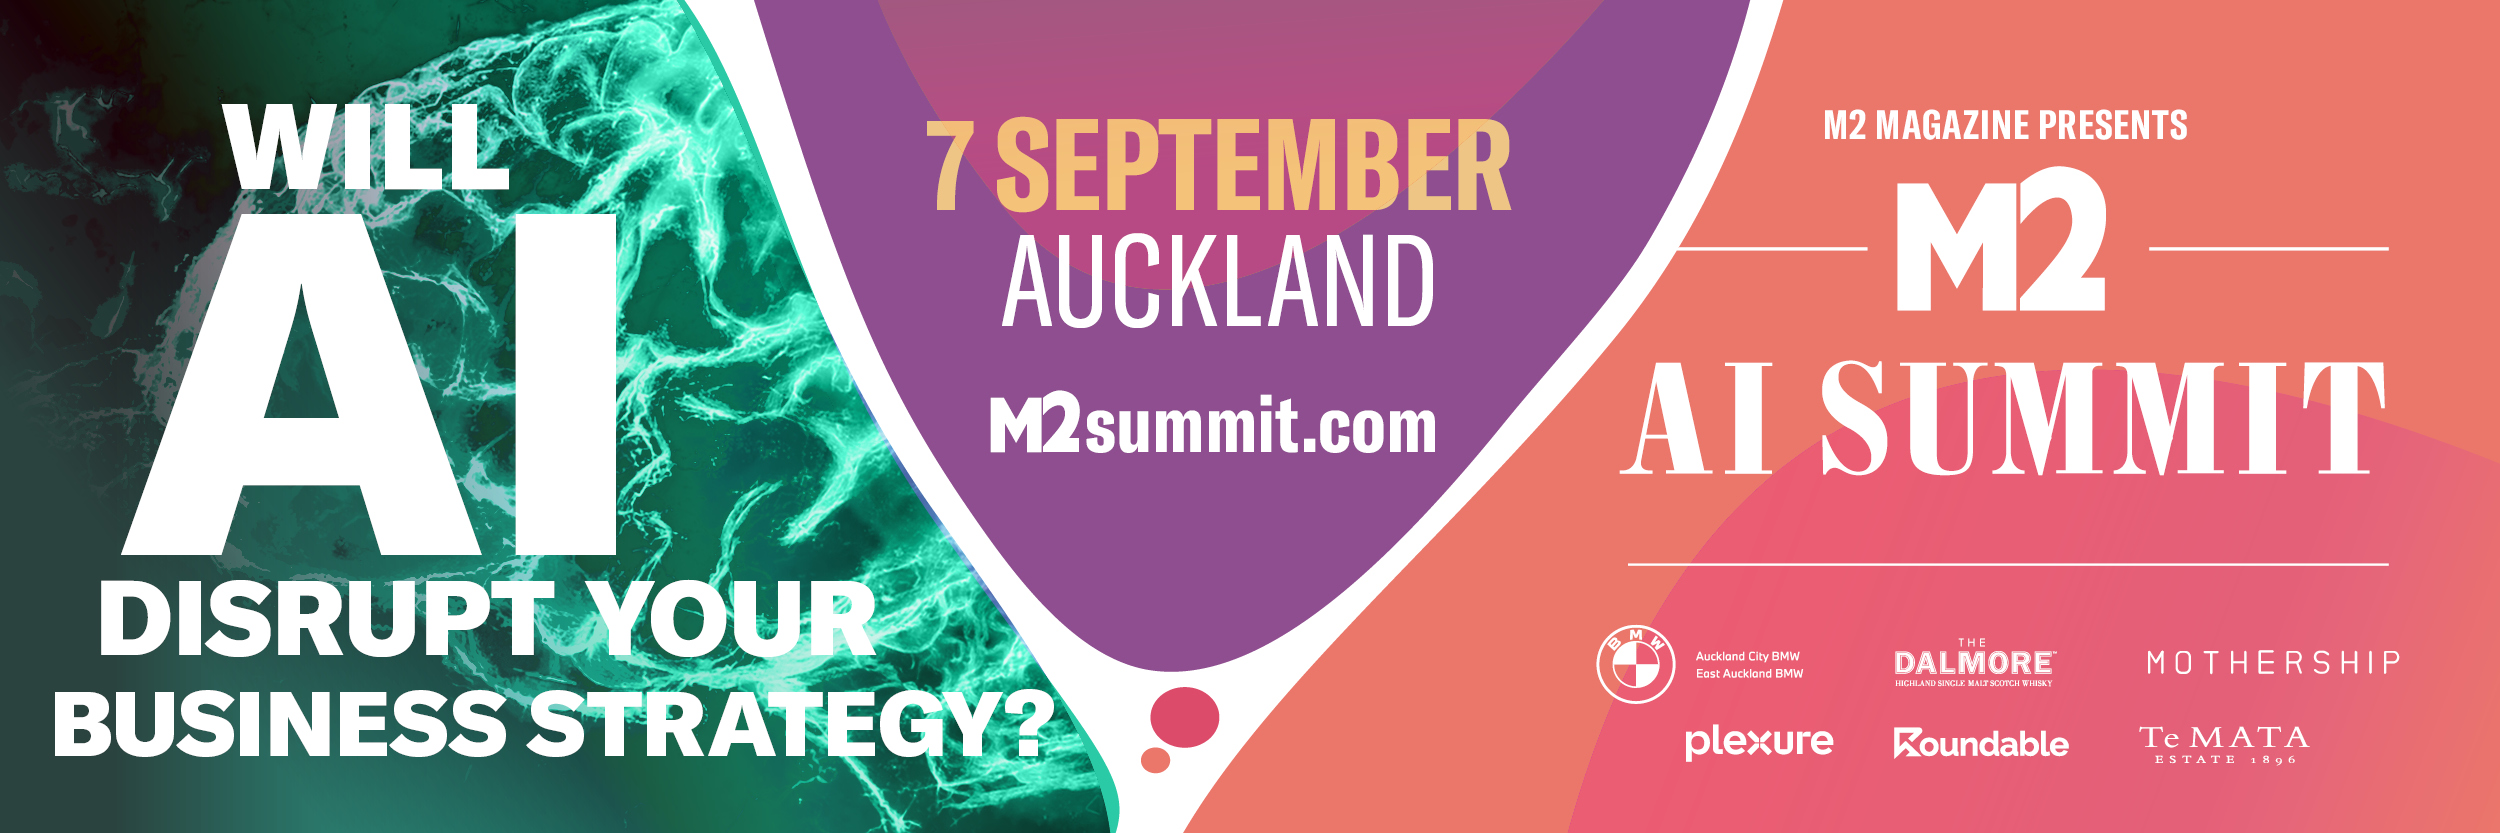 M2 AI Summit - Pre Registration